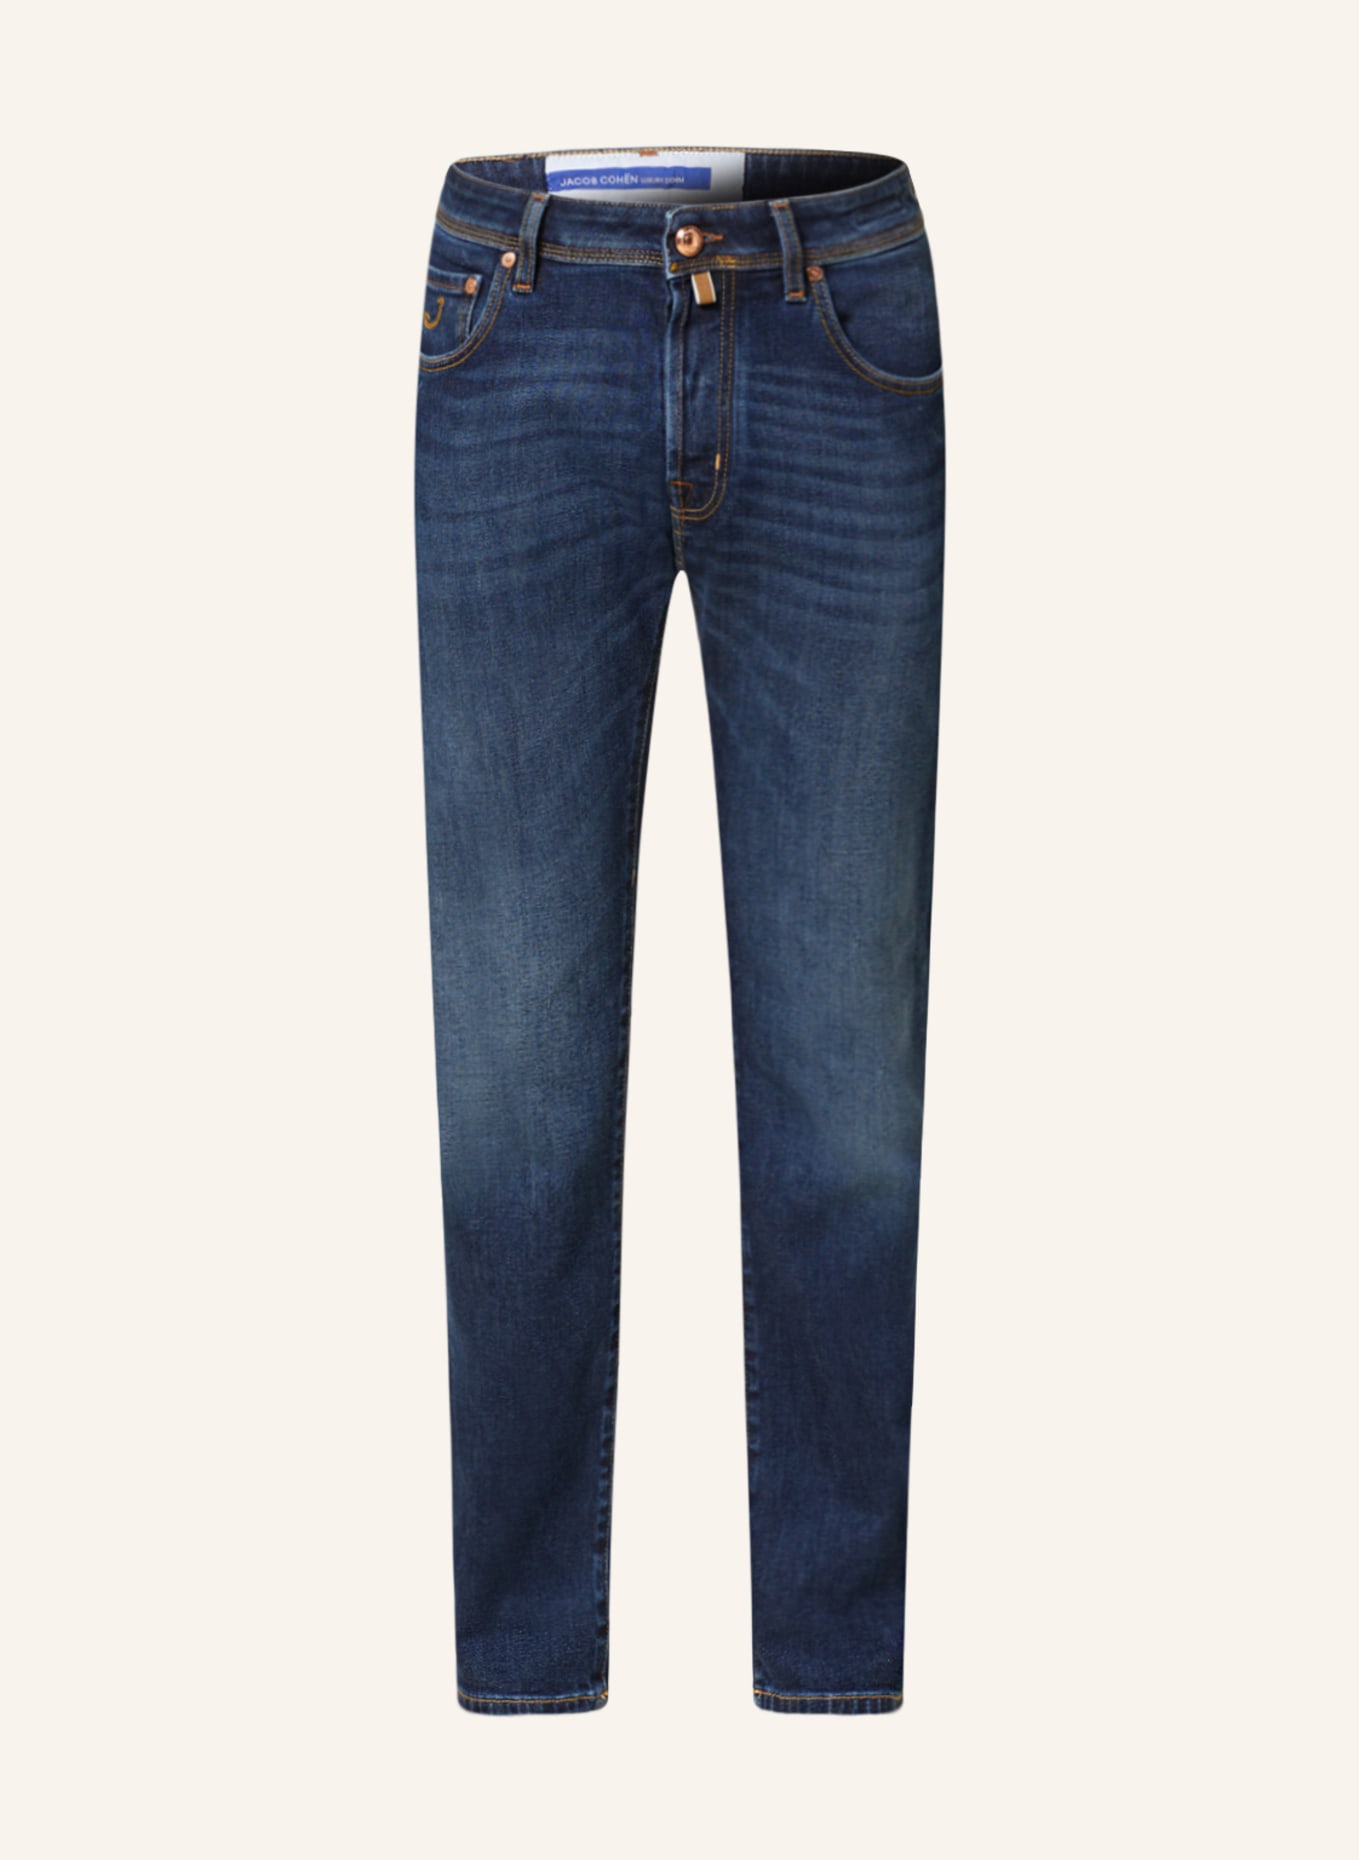 JACOB COHEN Destroyed Jeans BARD Slim Fit, Farbe: 547D Dark Blue (Bild 1)